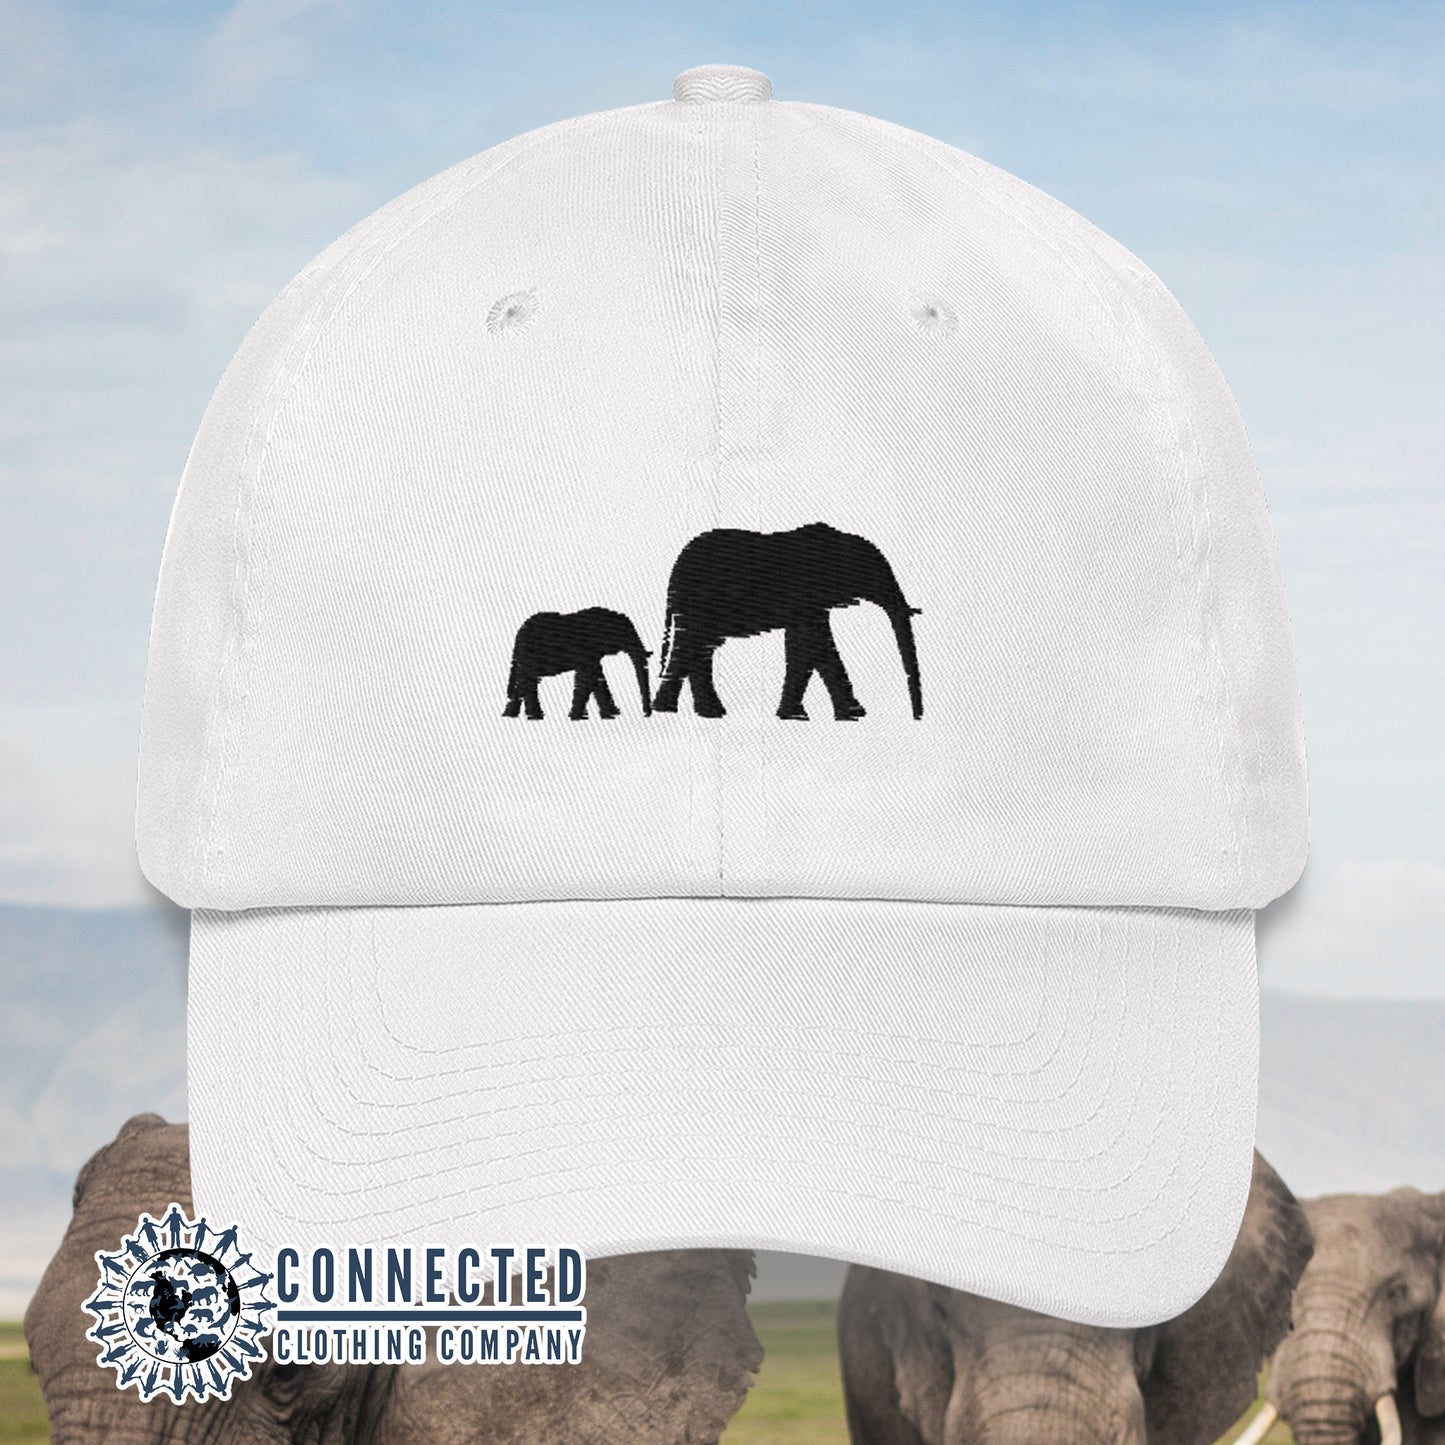 White Elephant Eco Friendly Cotton Cap - Connected Clothing Company - 10% of profits donated to elephant conservation